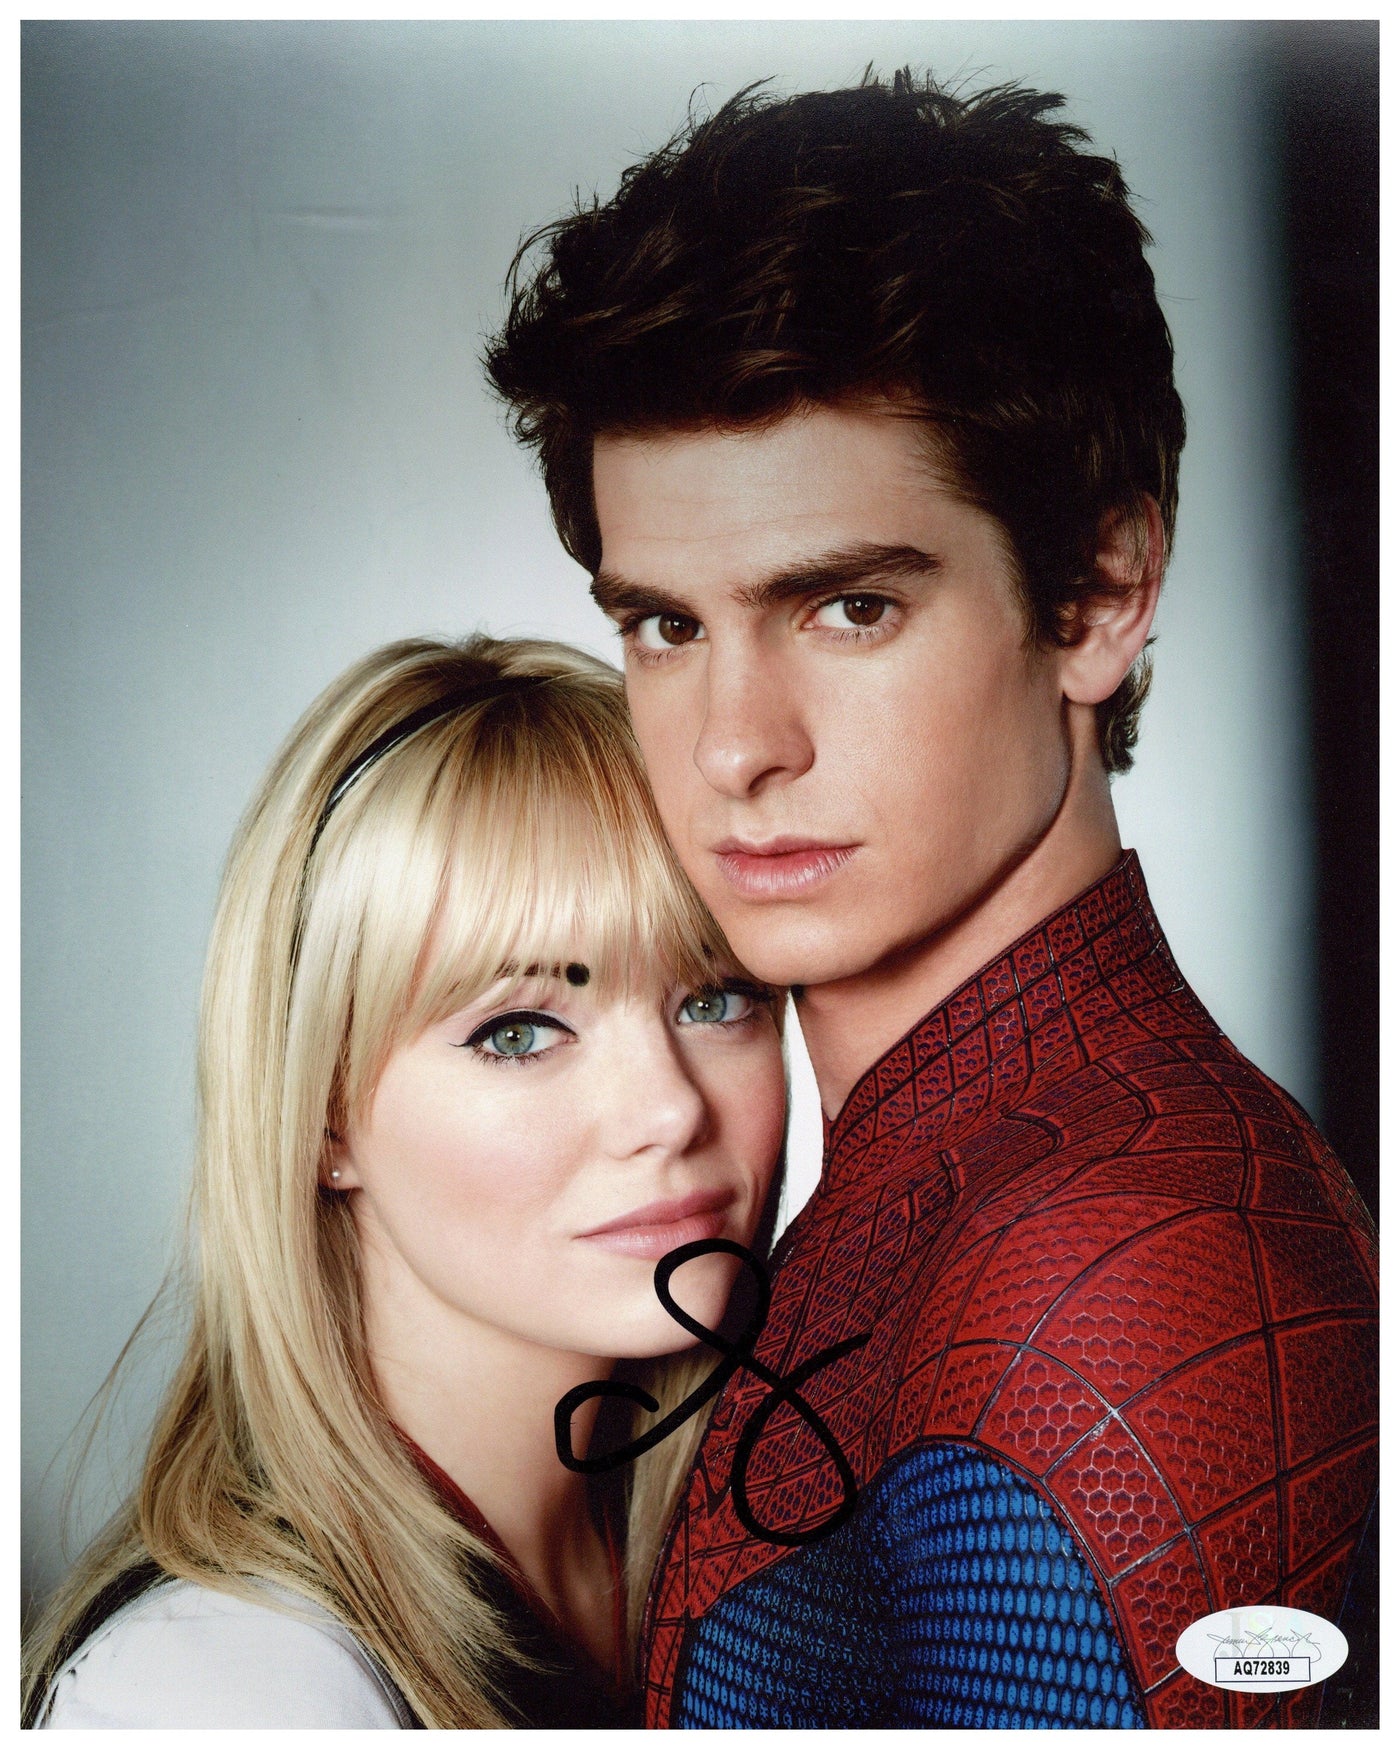 Emma Stone Signed 8x10 Photo Spider-Man Autographed JSA COA